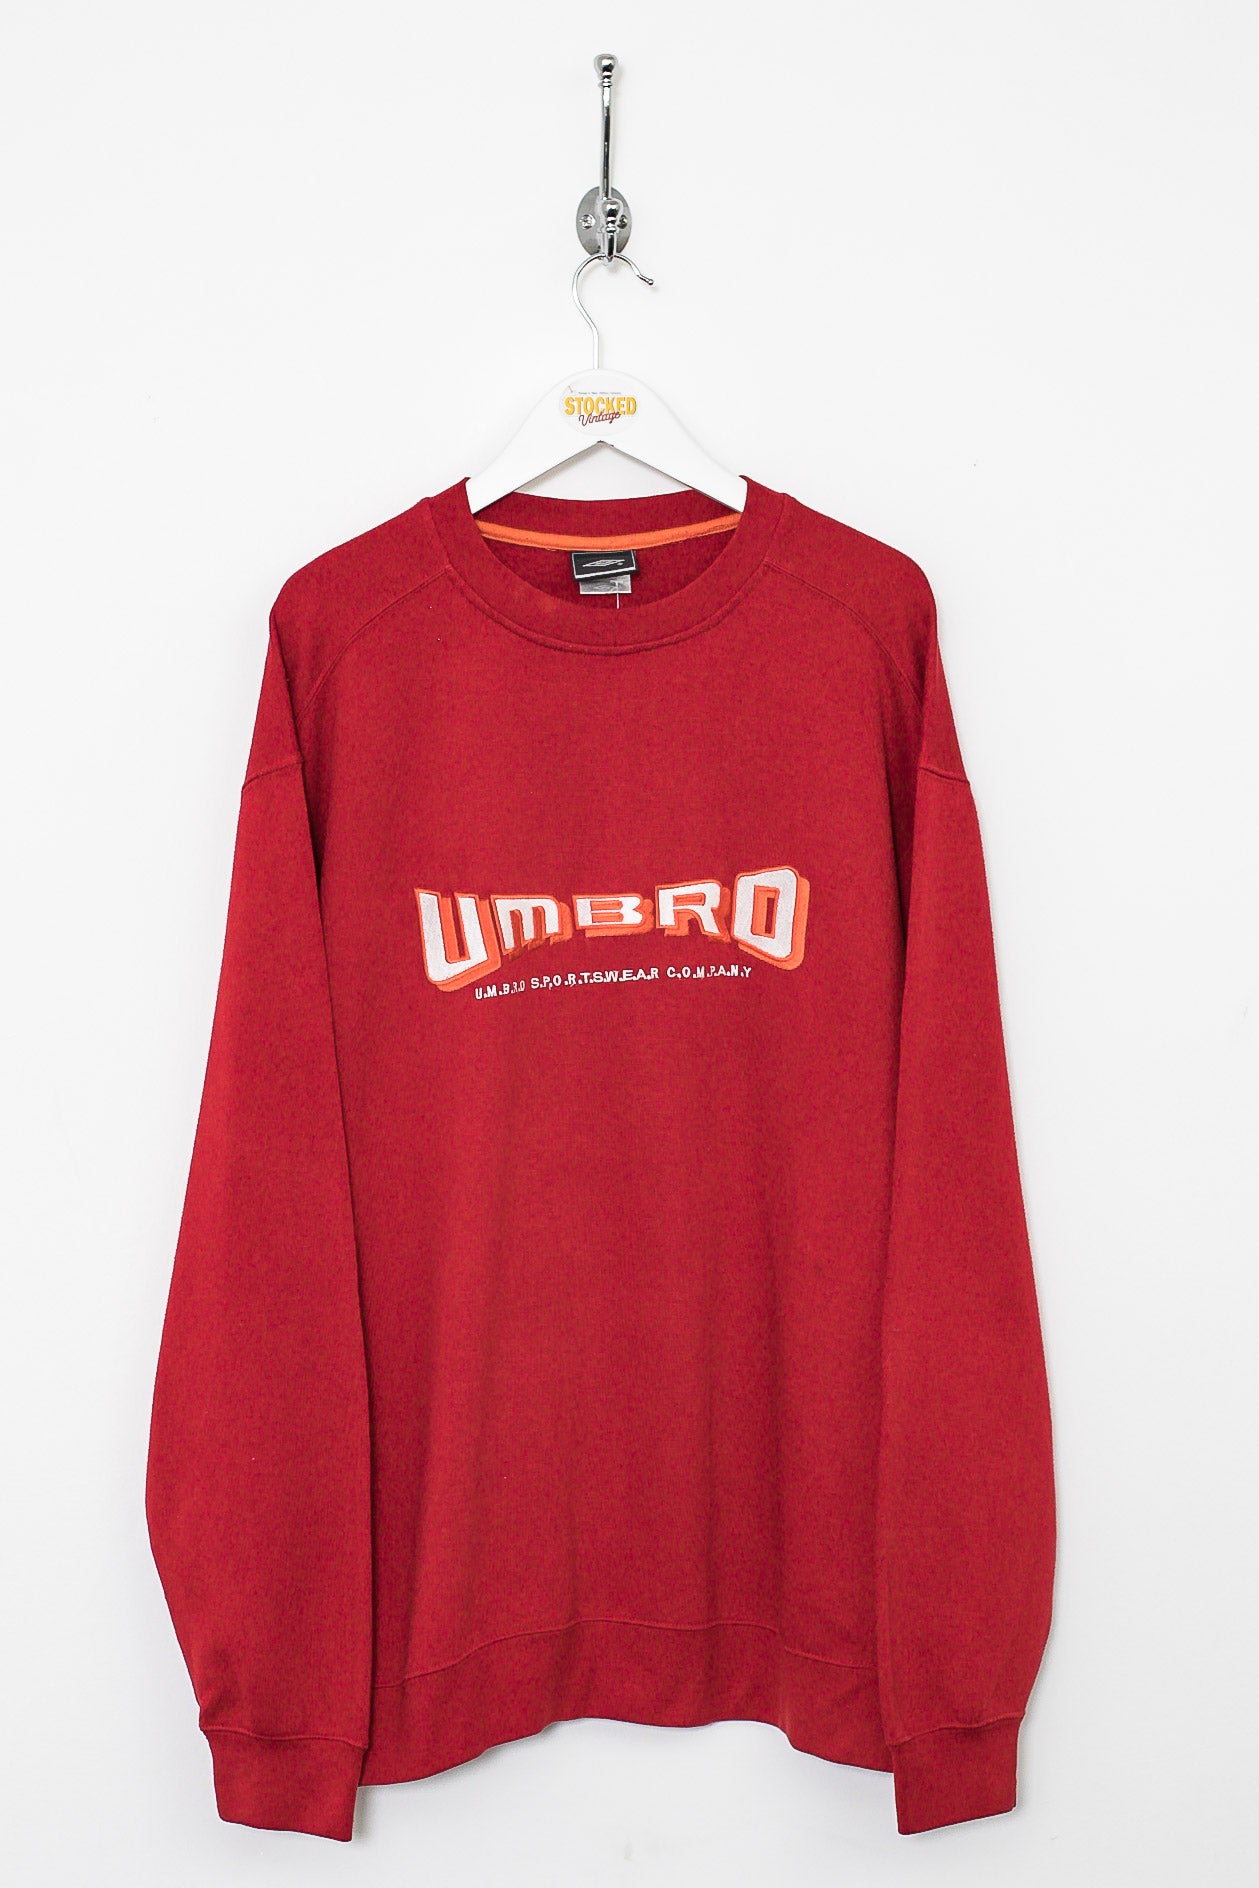 00s Umbro Sweatshirt (XL) – Stocked Vintage